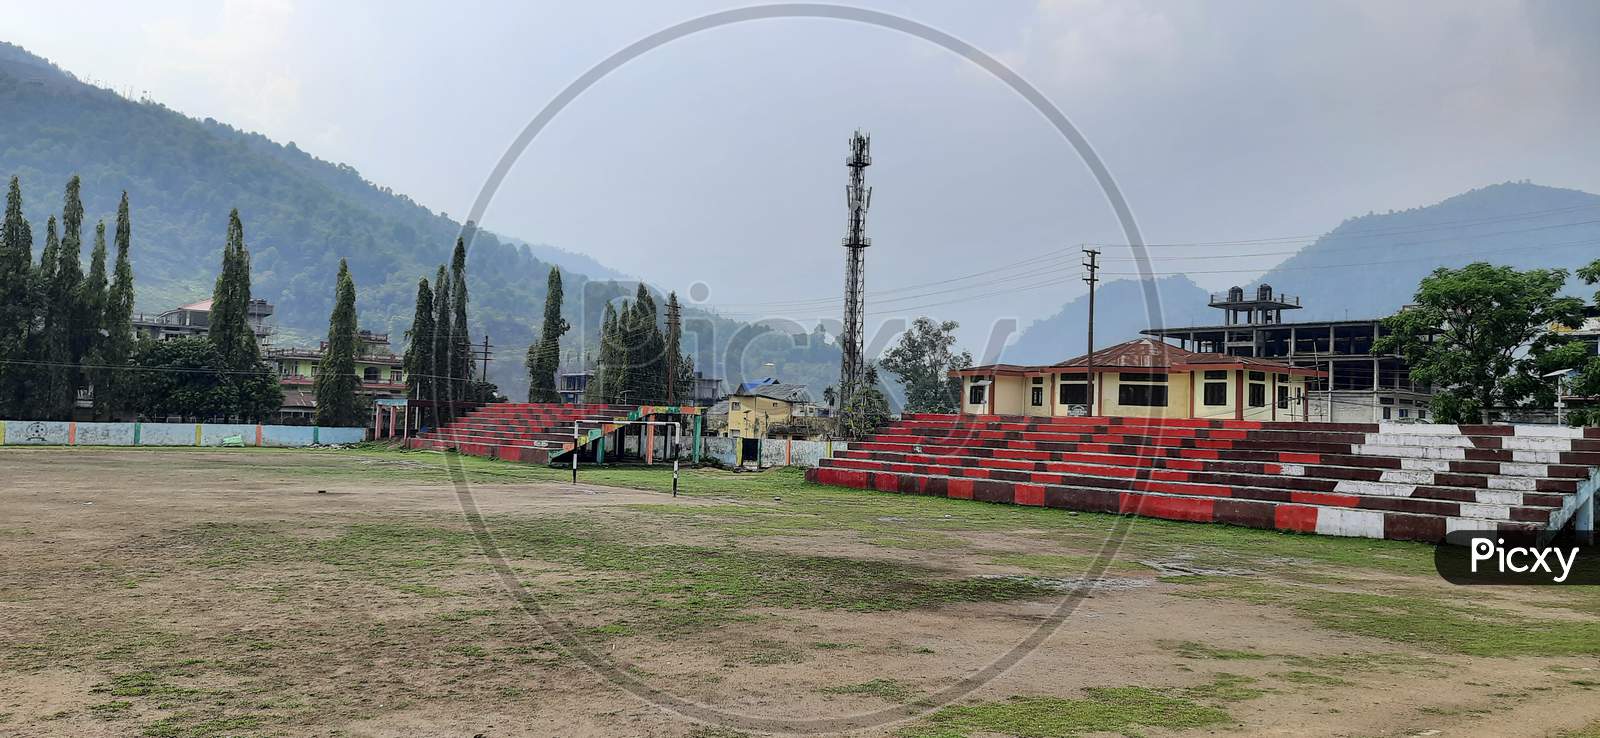 Football Ground, Seppa, East Kameng District, Arunachal Pradesh